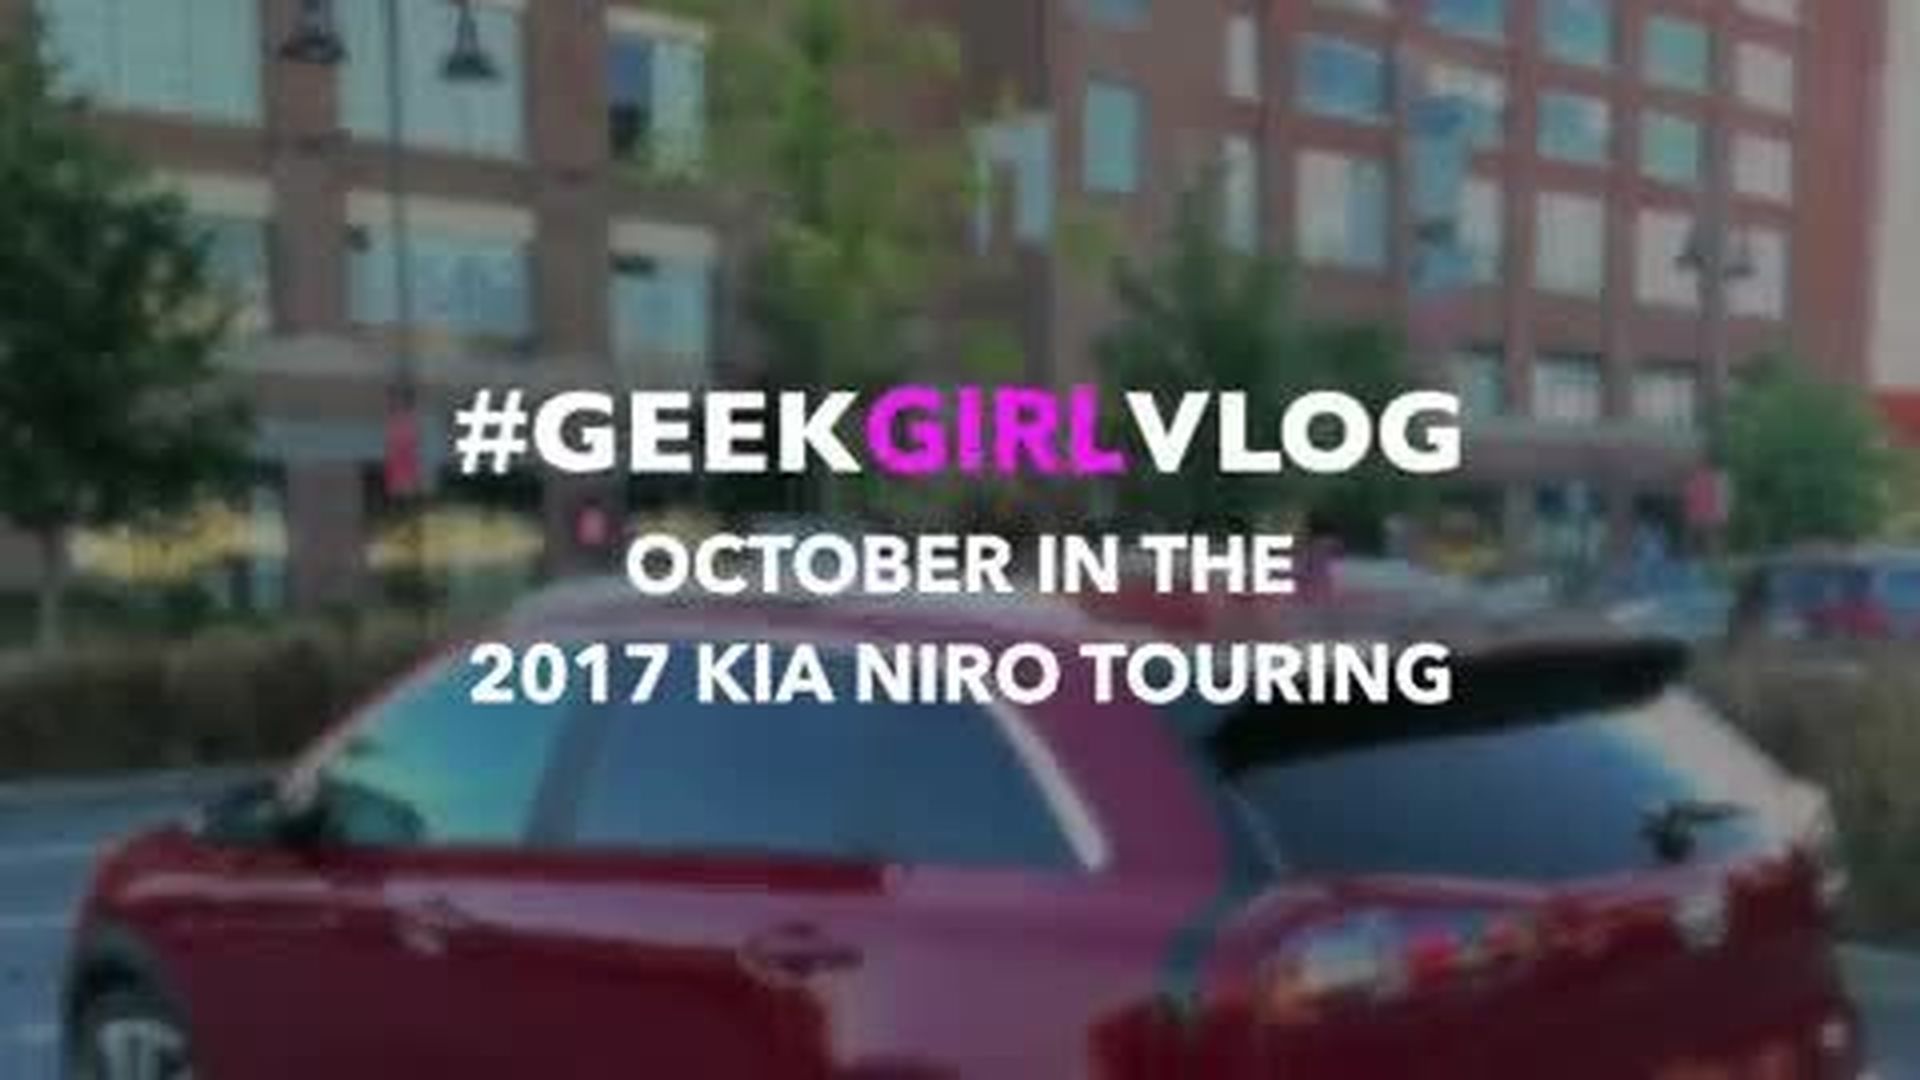 Geek Girl Vlog: October in the 2017 Kia Niro Touring